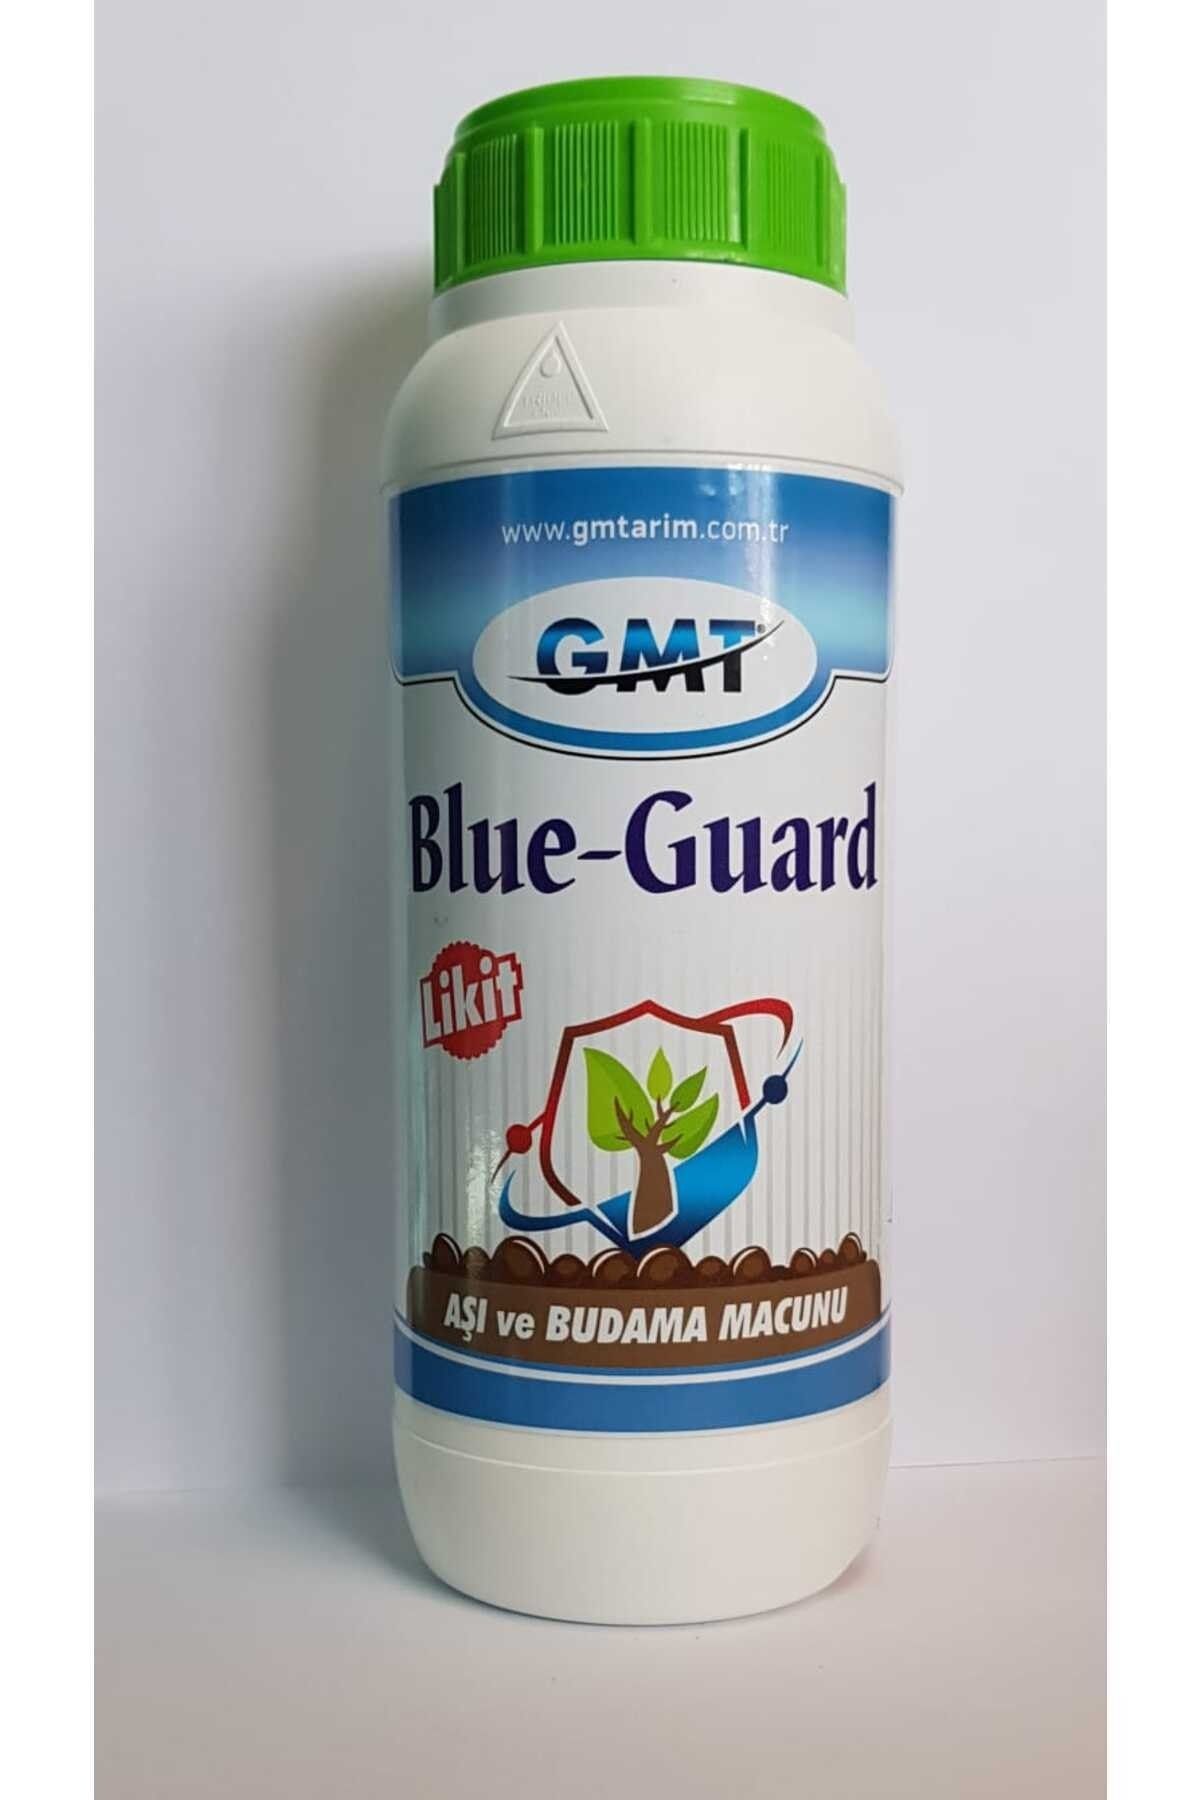 GMT Blue-Guard Sıvı Aşı ve Budama Macunu 1 Kg